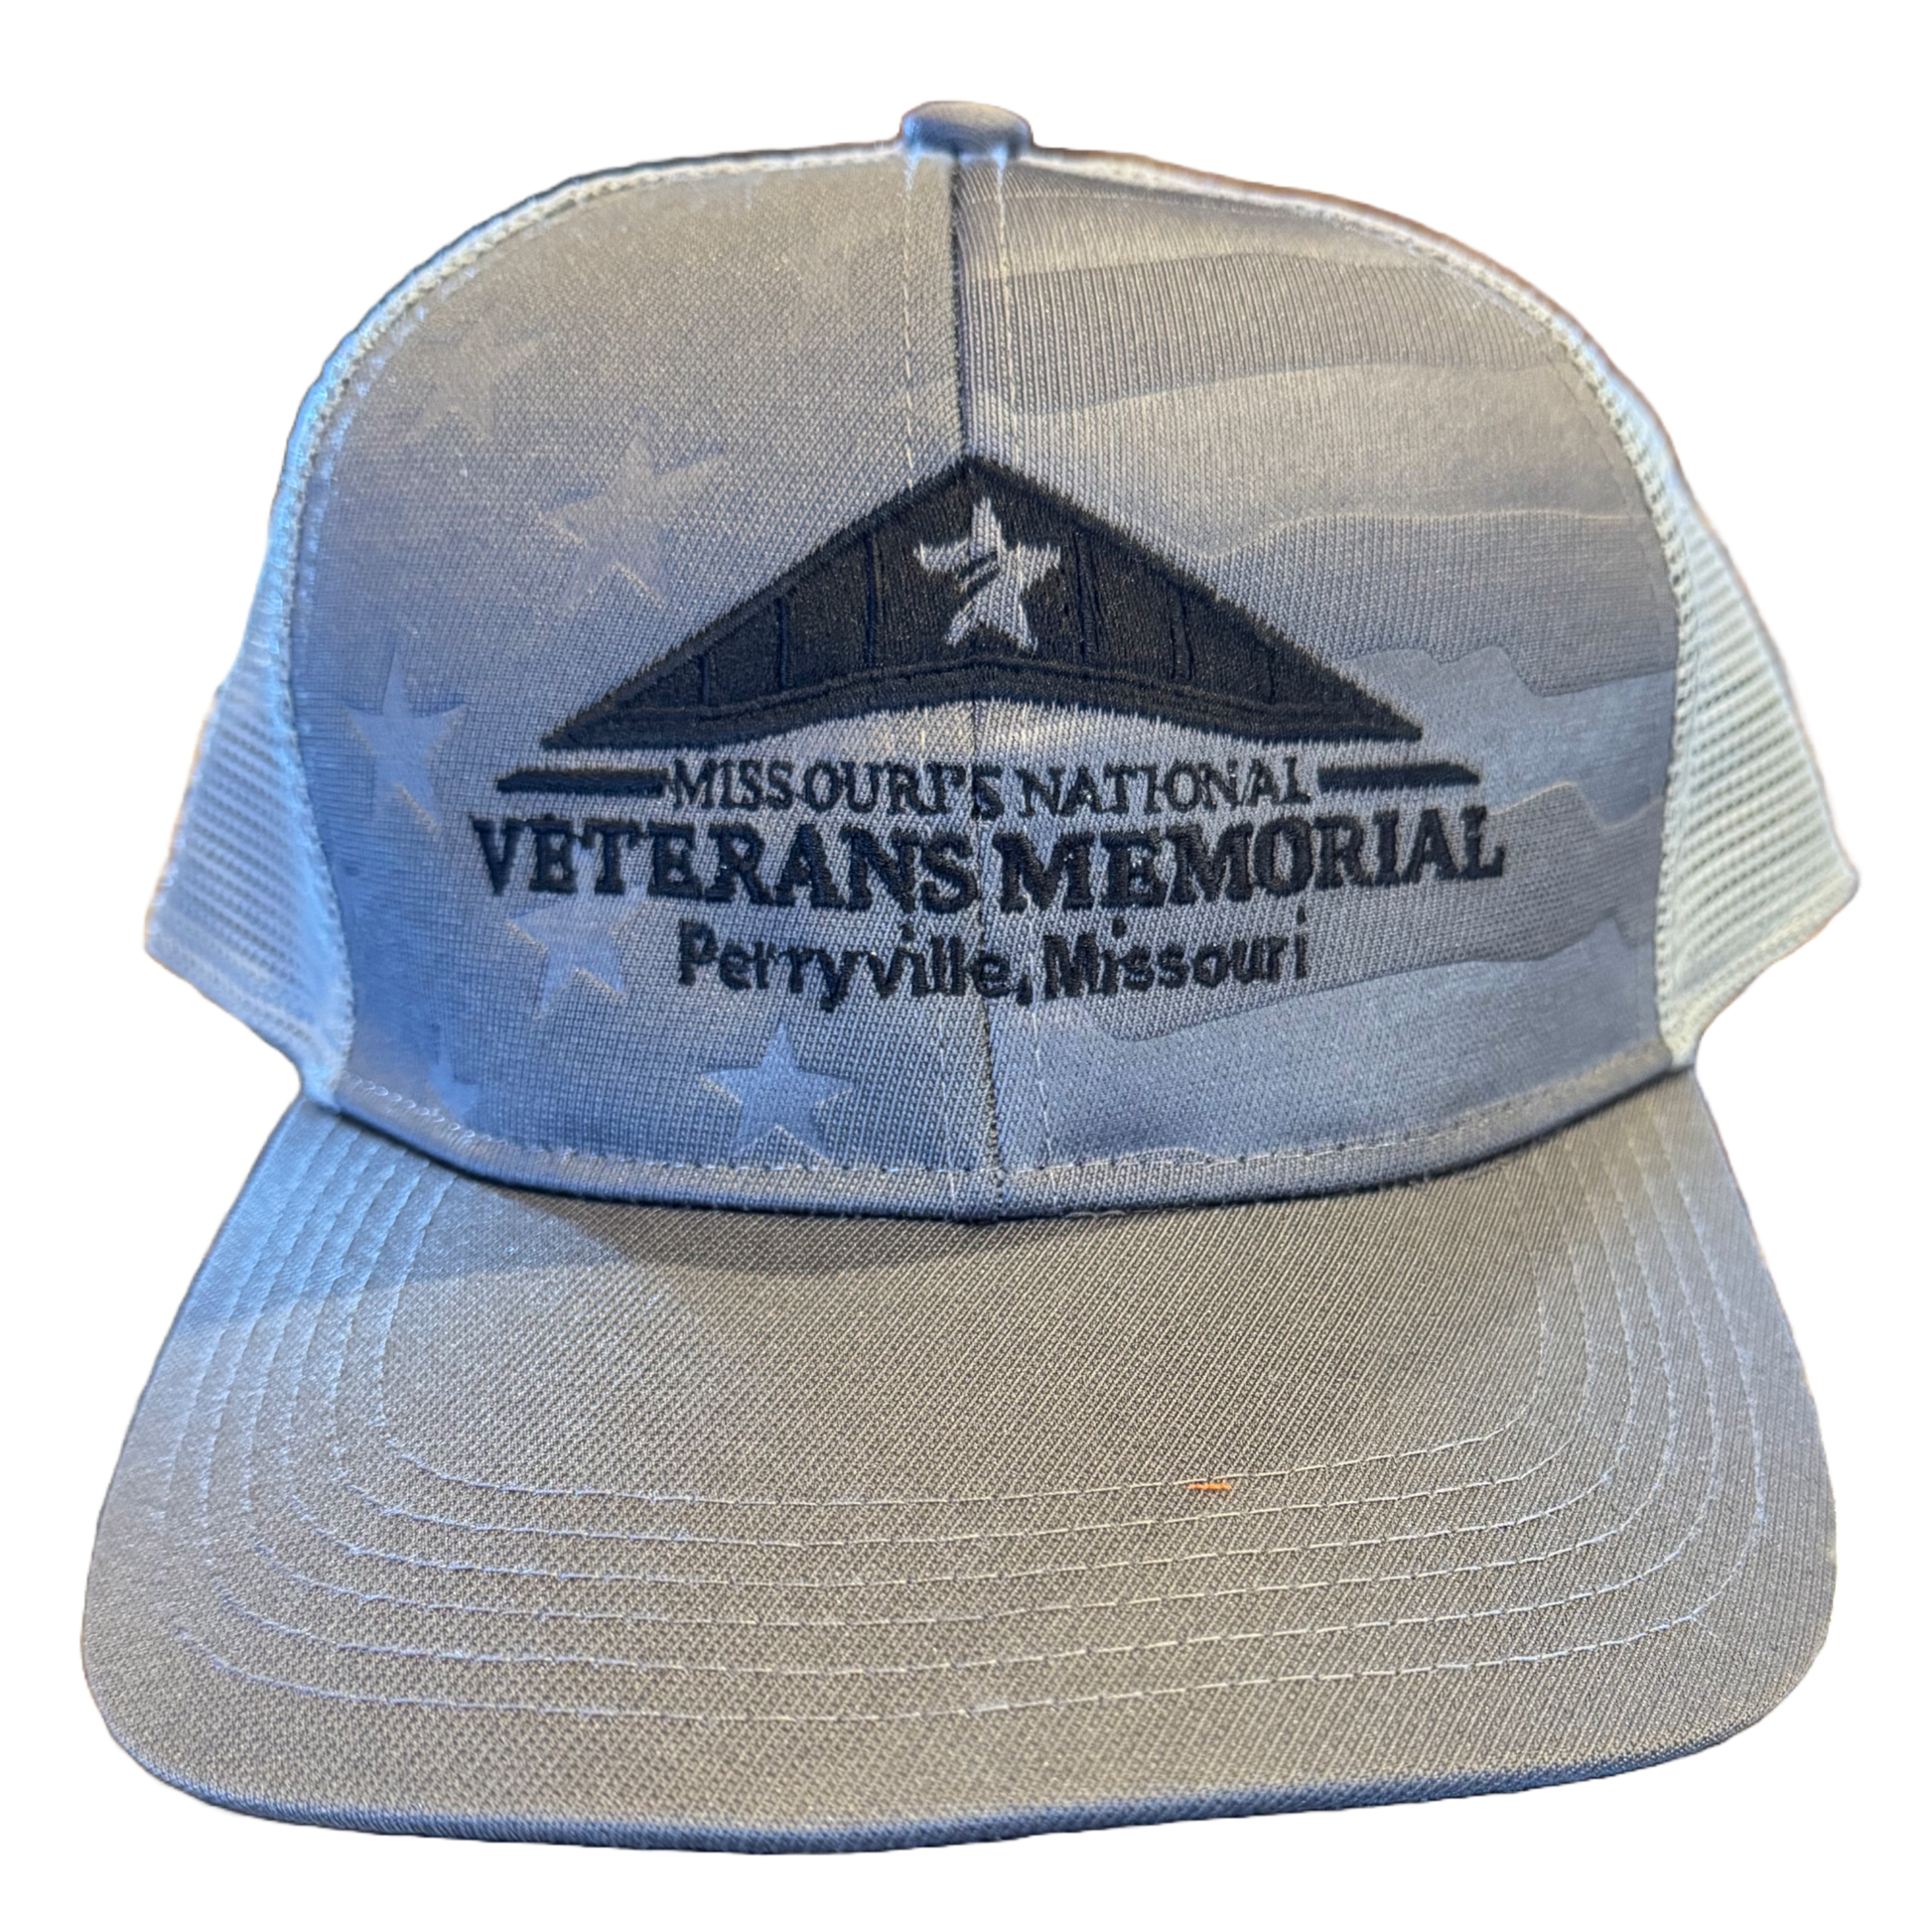 gray hat featuring Missouri's National Veterans Memorial Logo